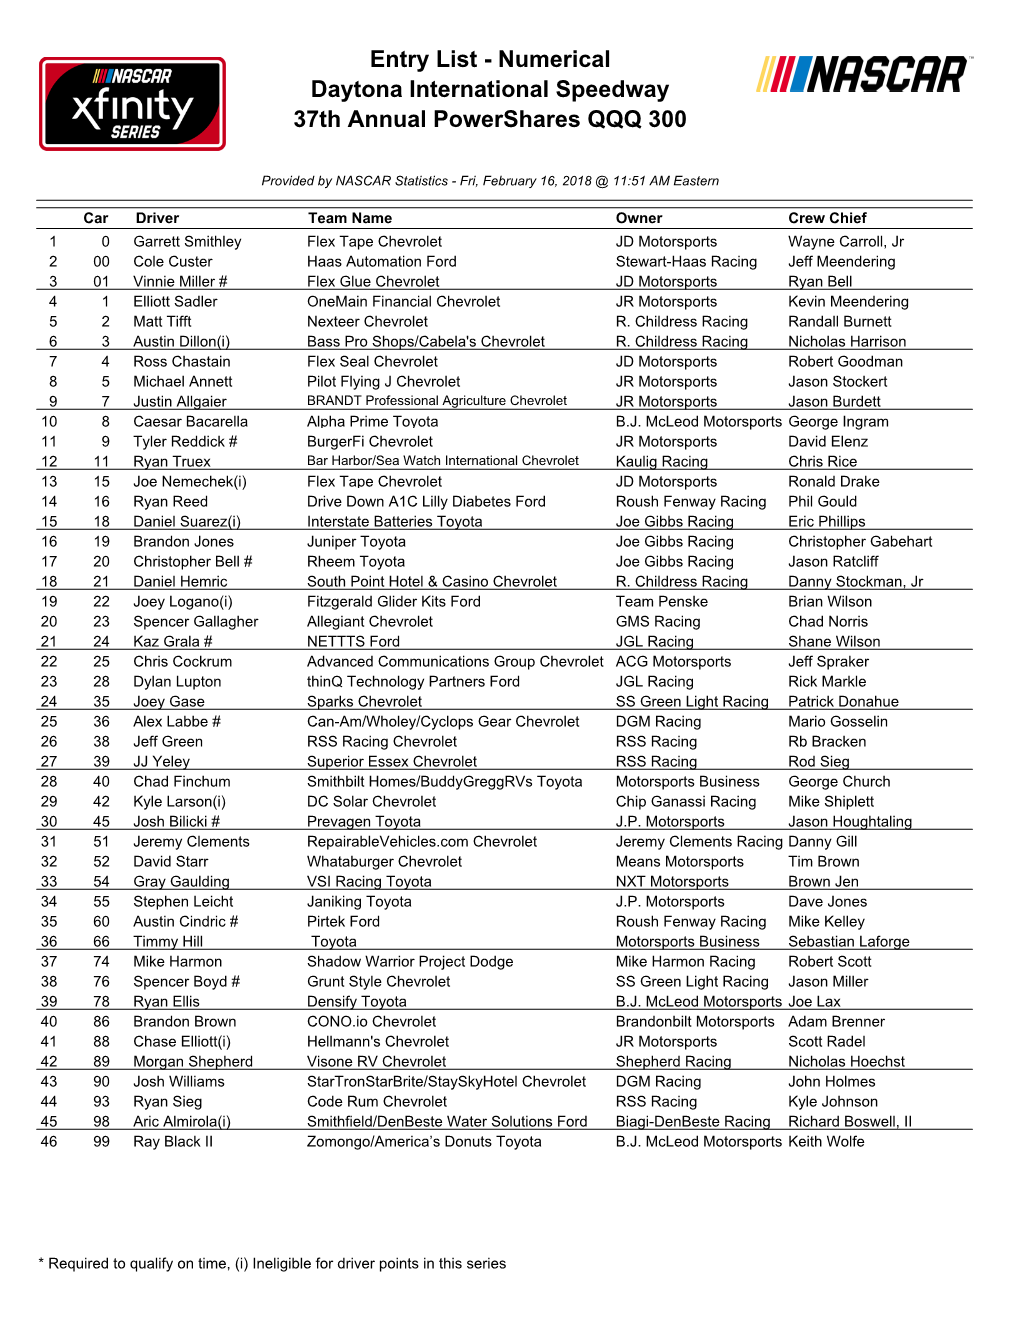 Entry List - Numerical Daytona International Speedway 37Th Annual Powershares QQQ 300